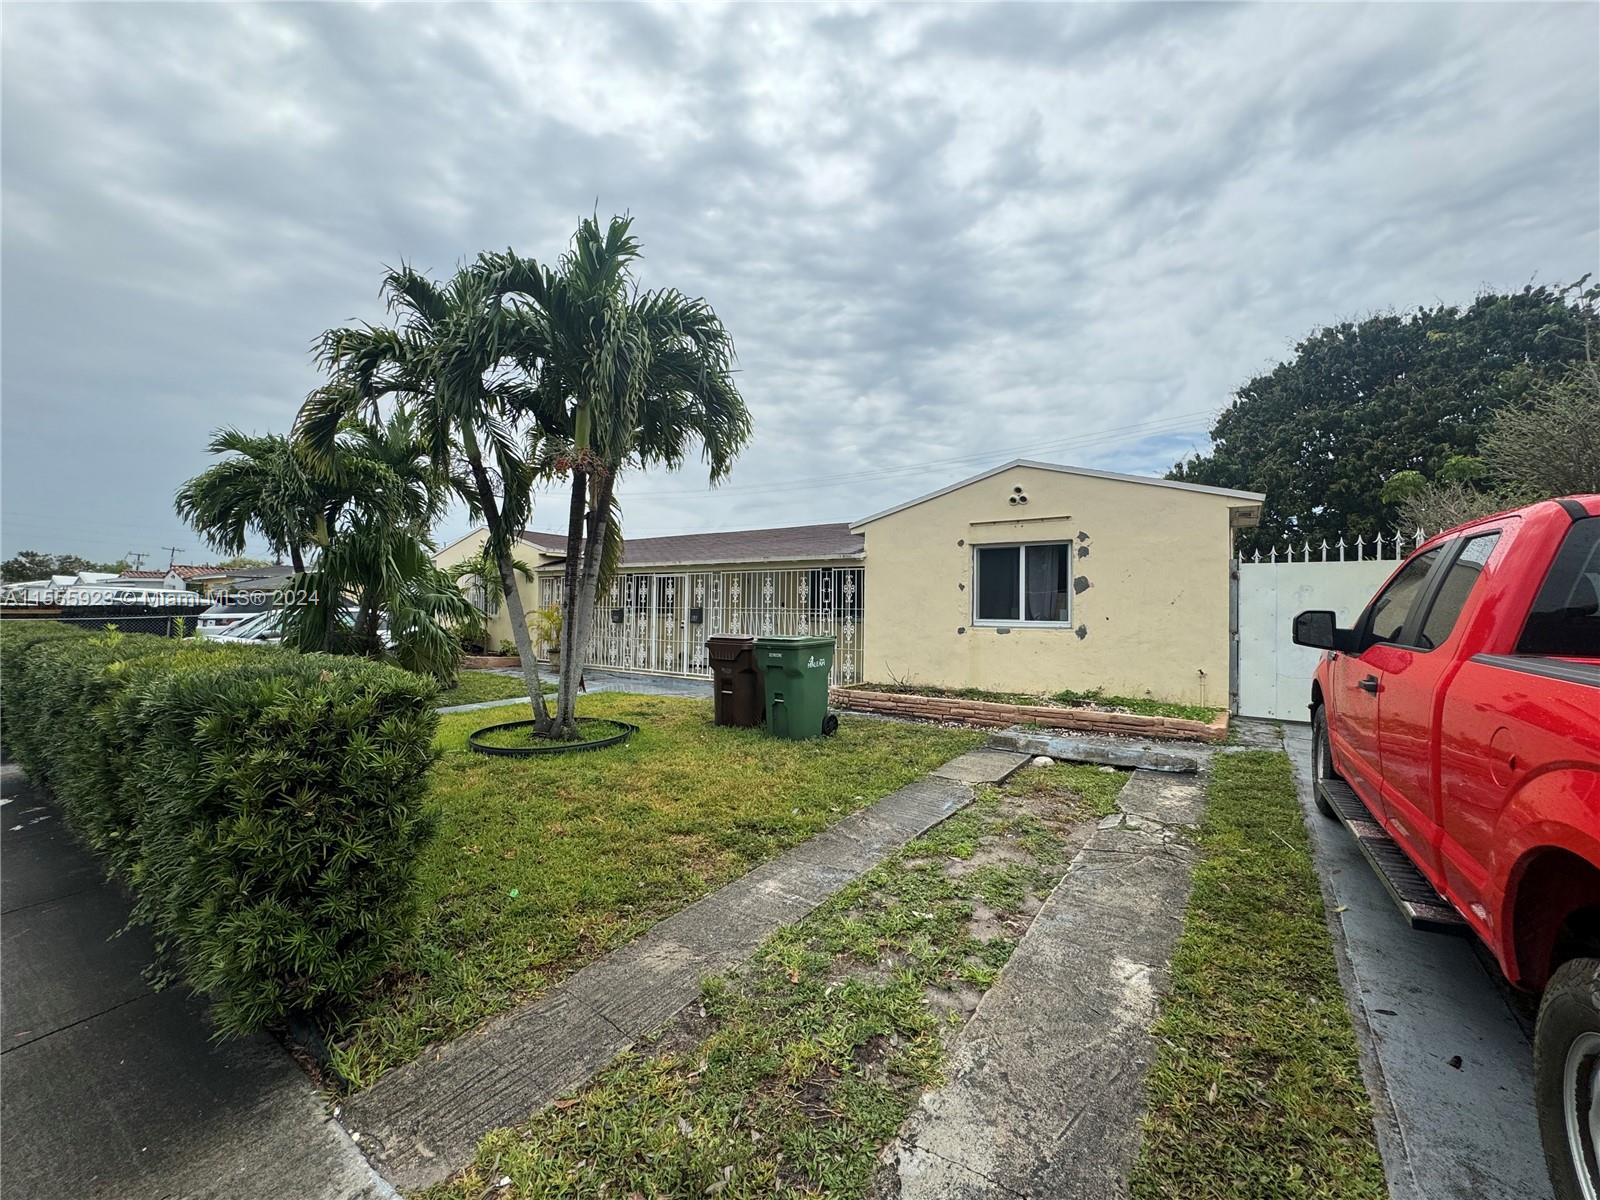 Rental Property at 66 Ne 6th Ave, Hialeah, Miami-Dade County, Florida -  - $795,000 MO.